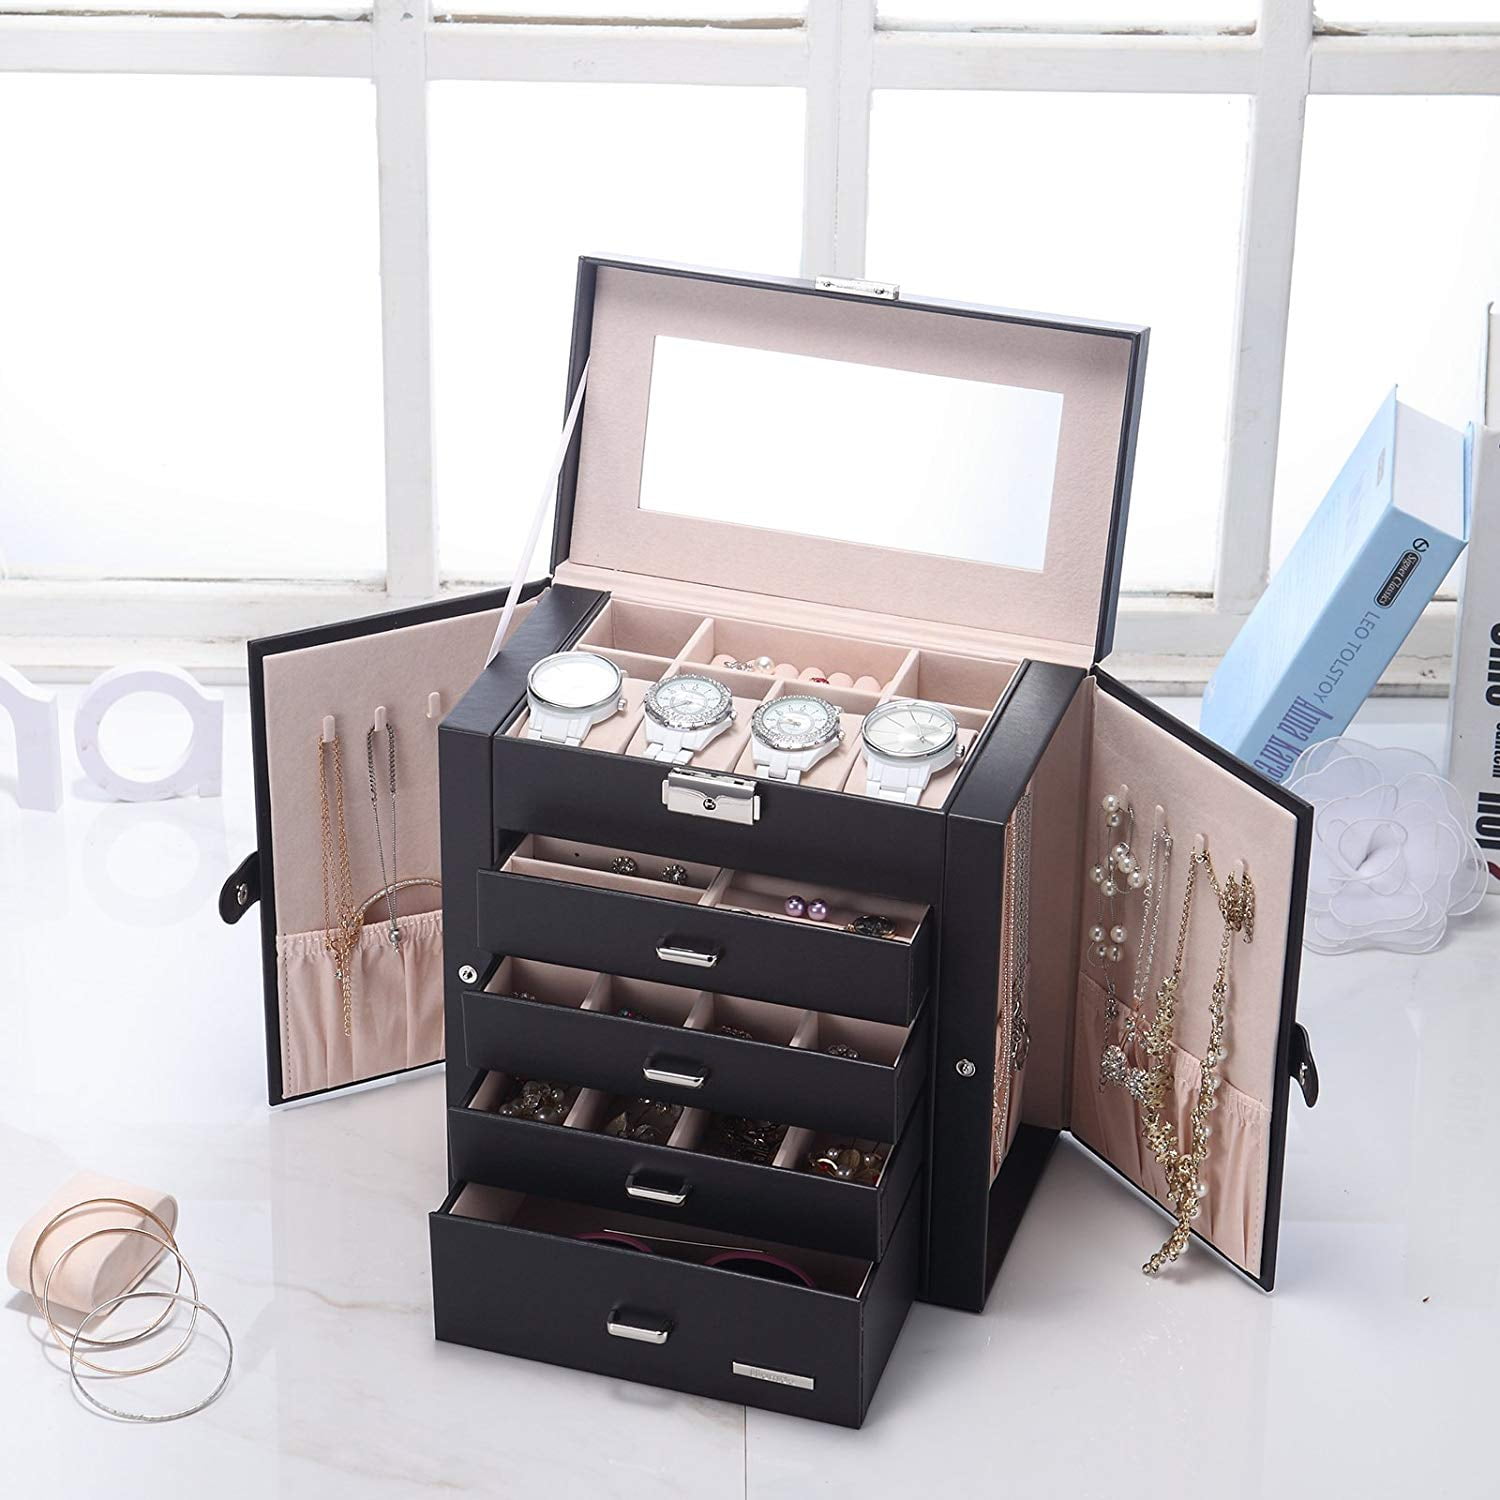 Details about   54 Grids Jewelry Tray Case Velvet Ring Display Box Holder Storage Organizer 